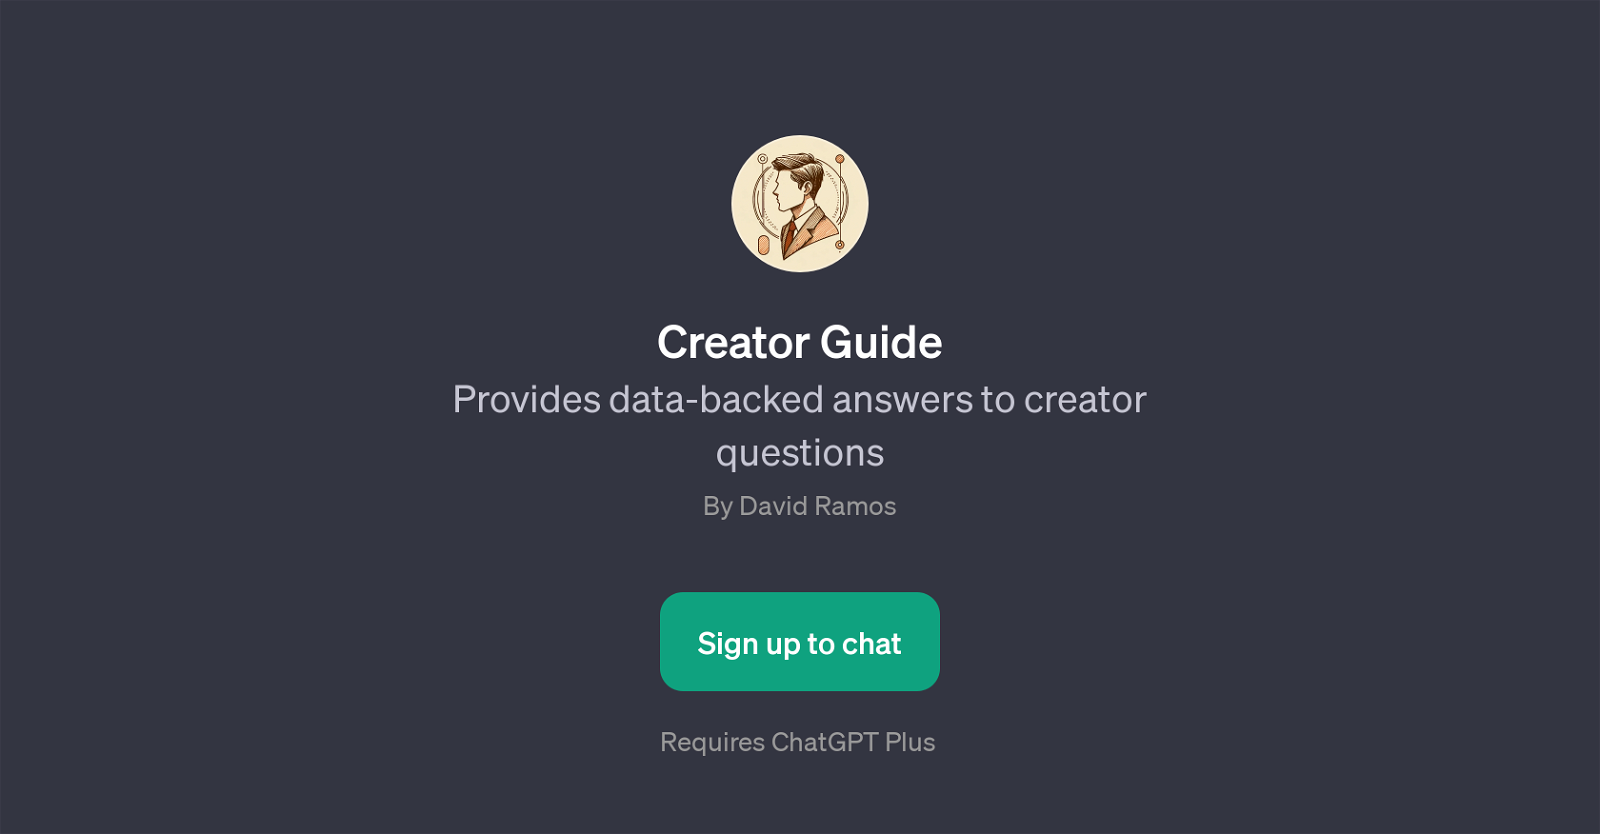 Creator Guide website